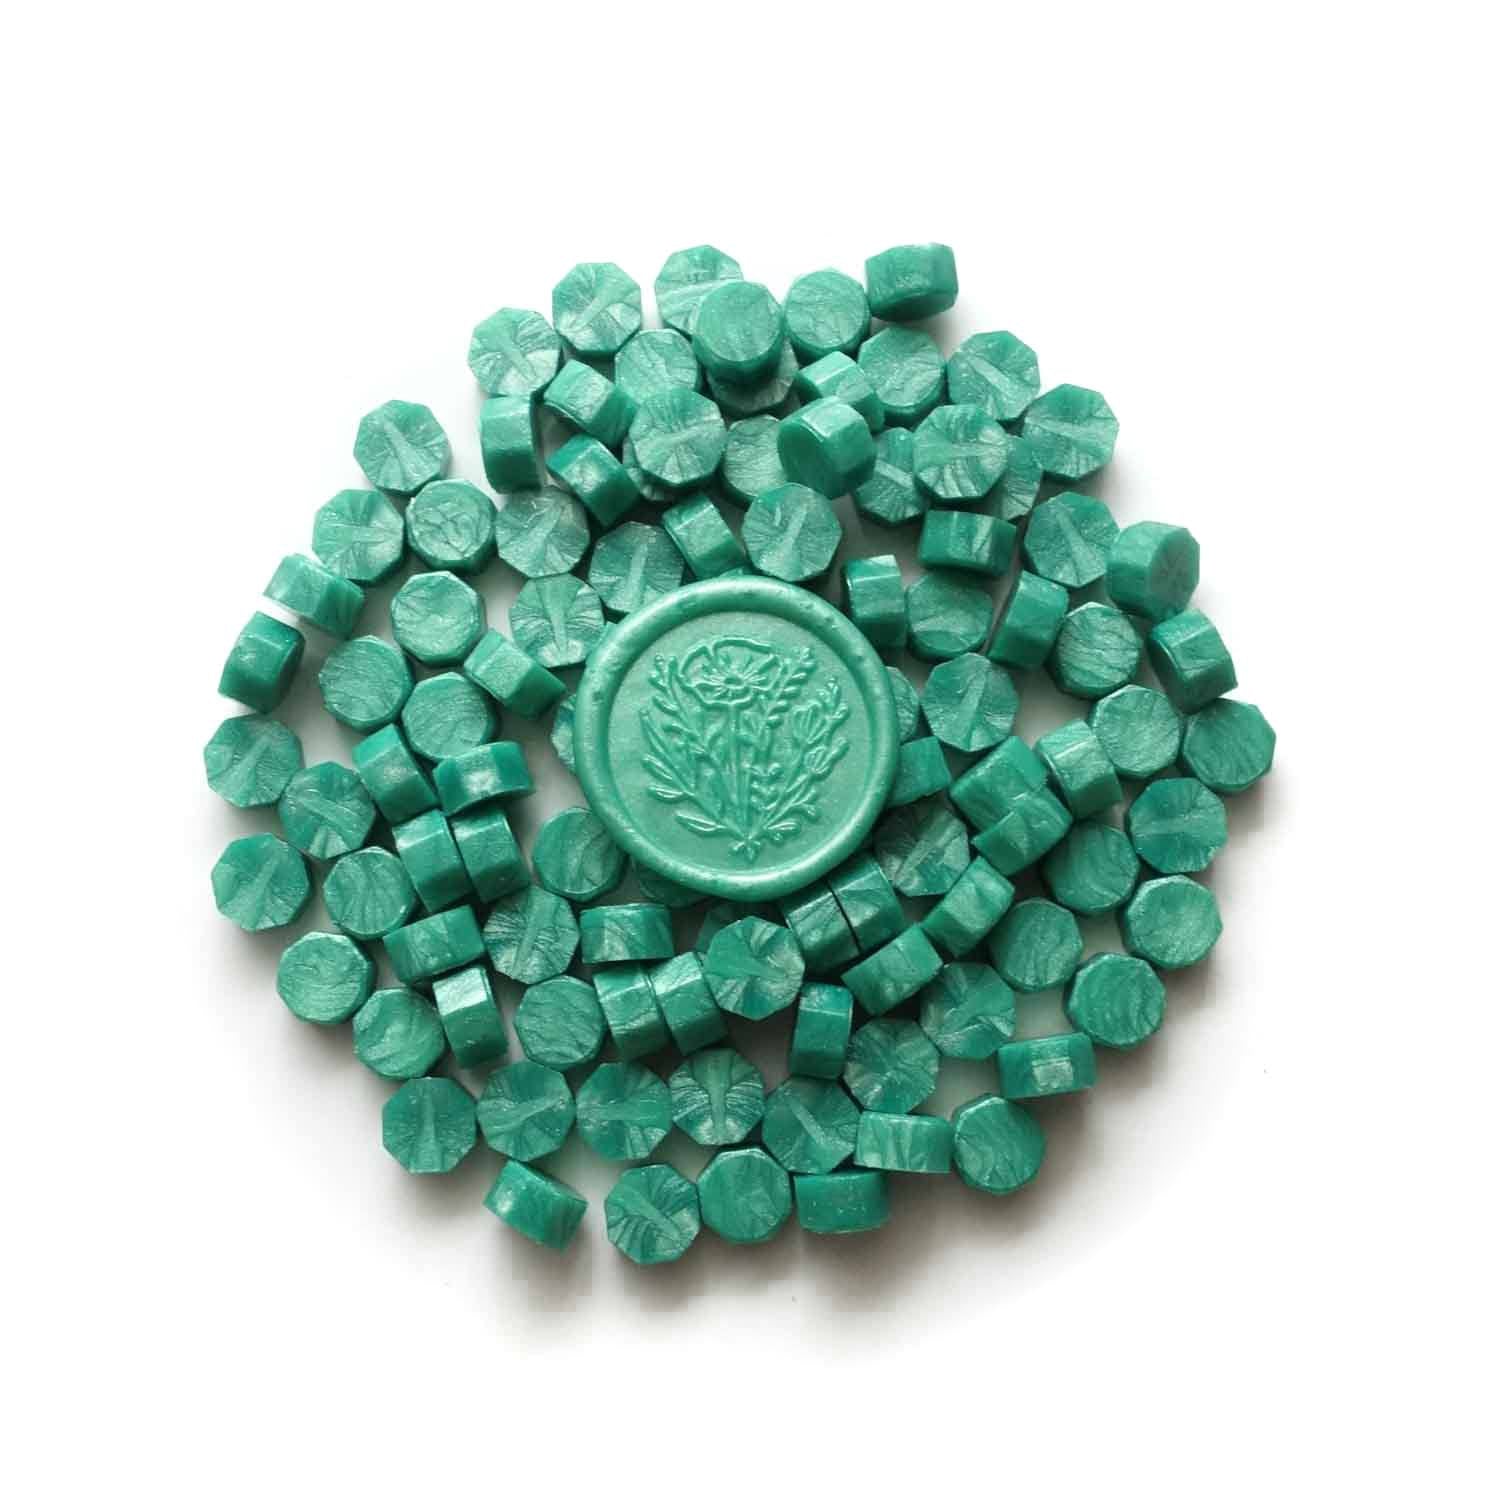 Aqua turquoise green sealing wax beads with flower poppy wax seal australia